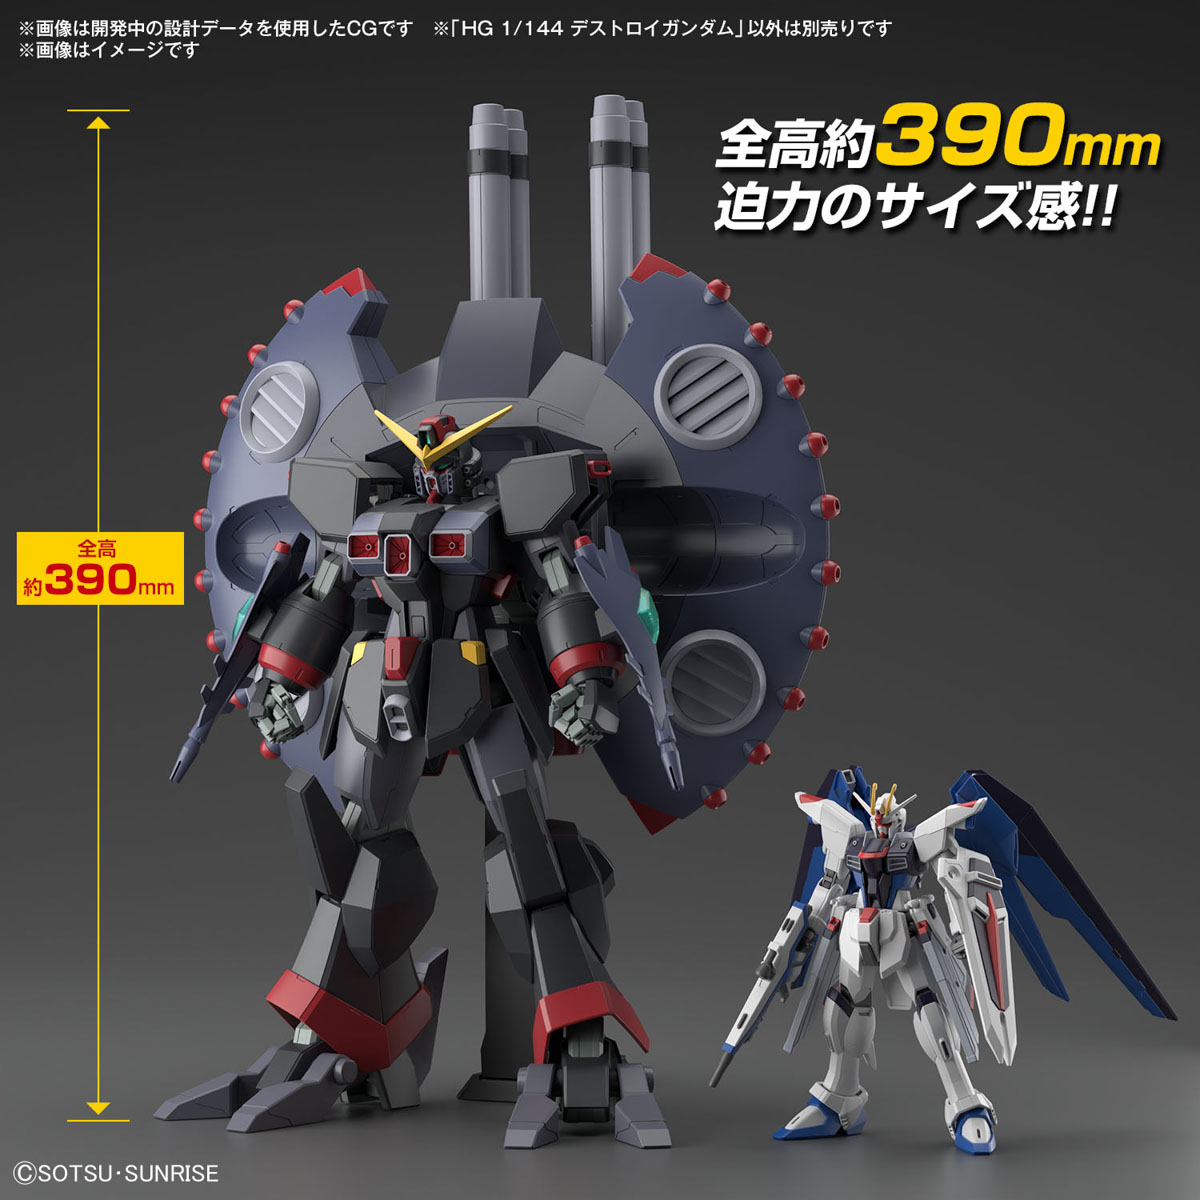 HG 1/144 Destroy Gundam - Release Info